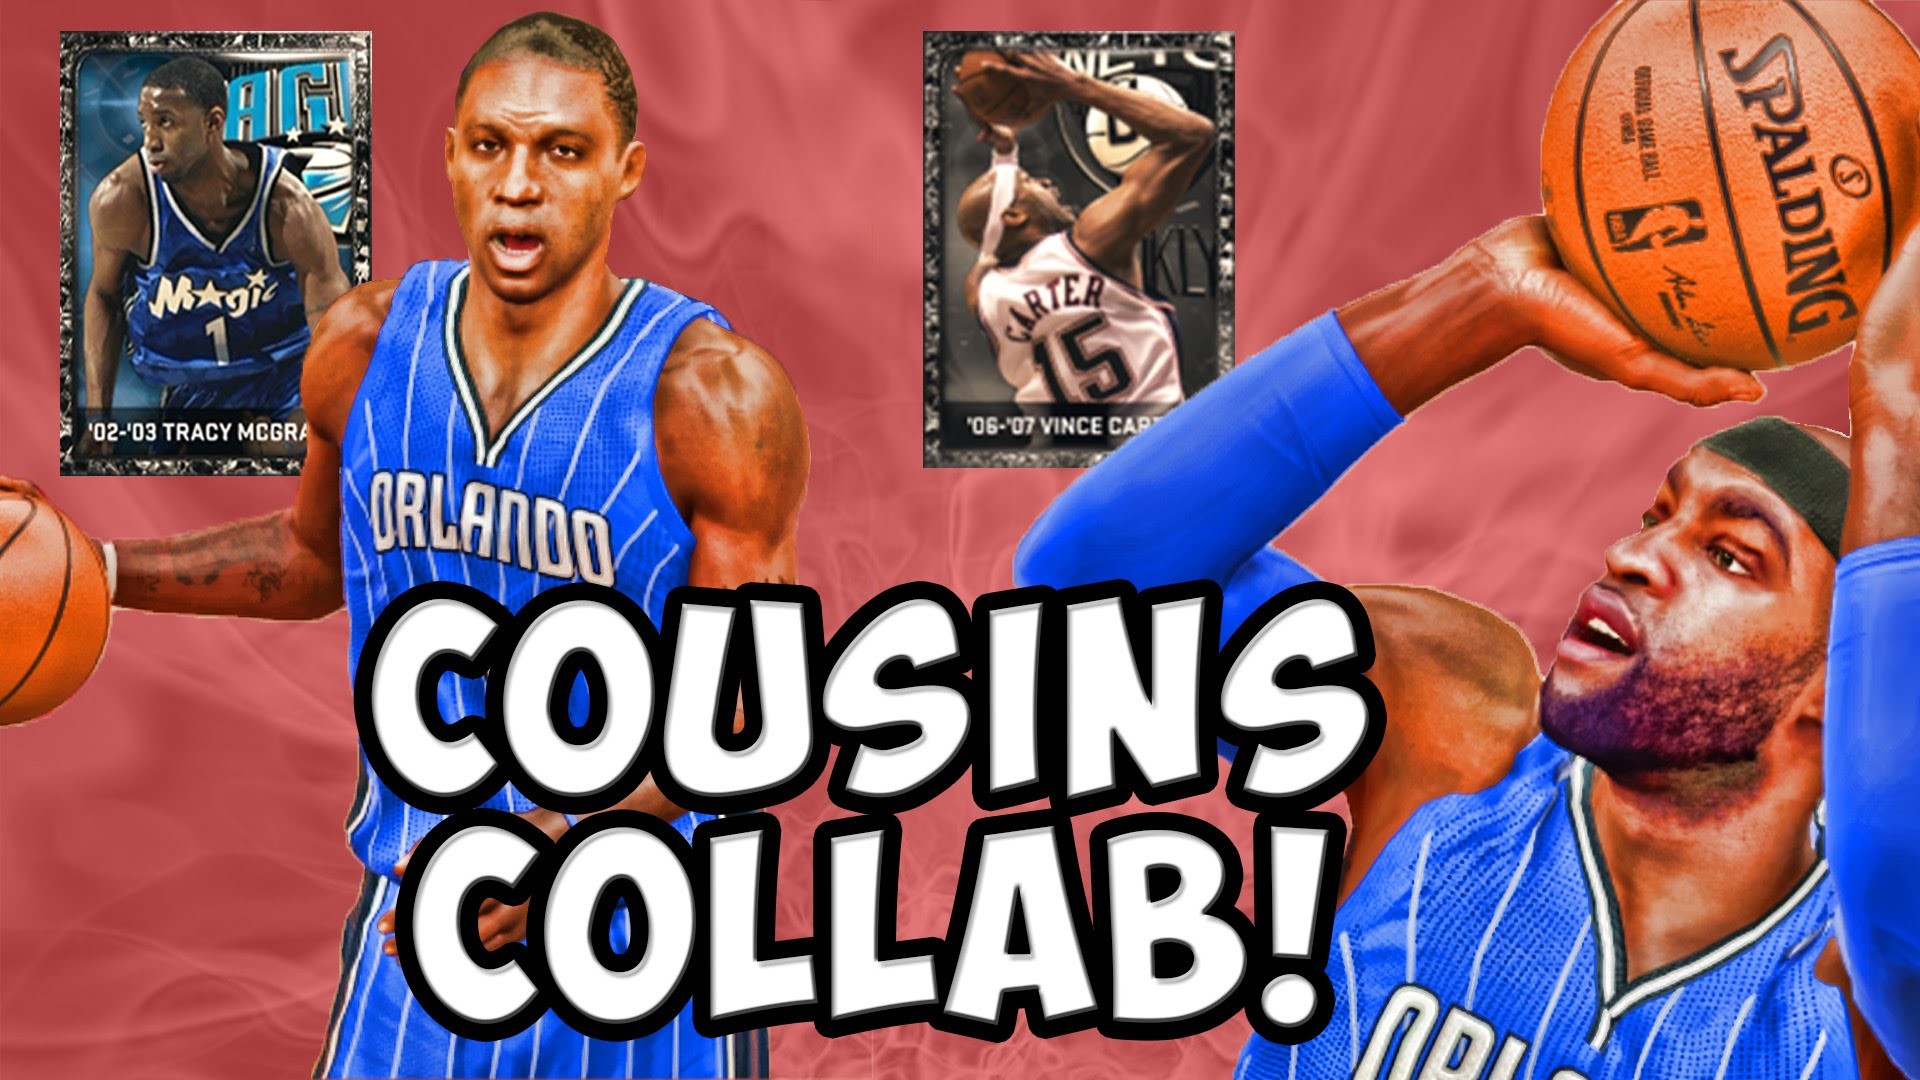 1920x1080 NBA 2K15 MyTeam Gameplay - Onyx Cousins! Tracy McGrady and Vince Carter  destroy! Varsity Squad! - YouTube